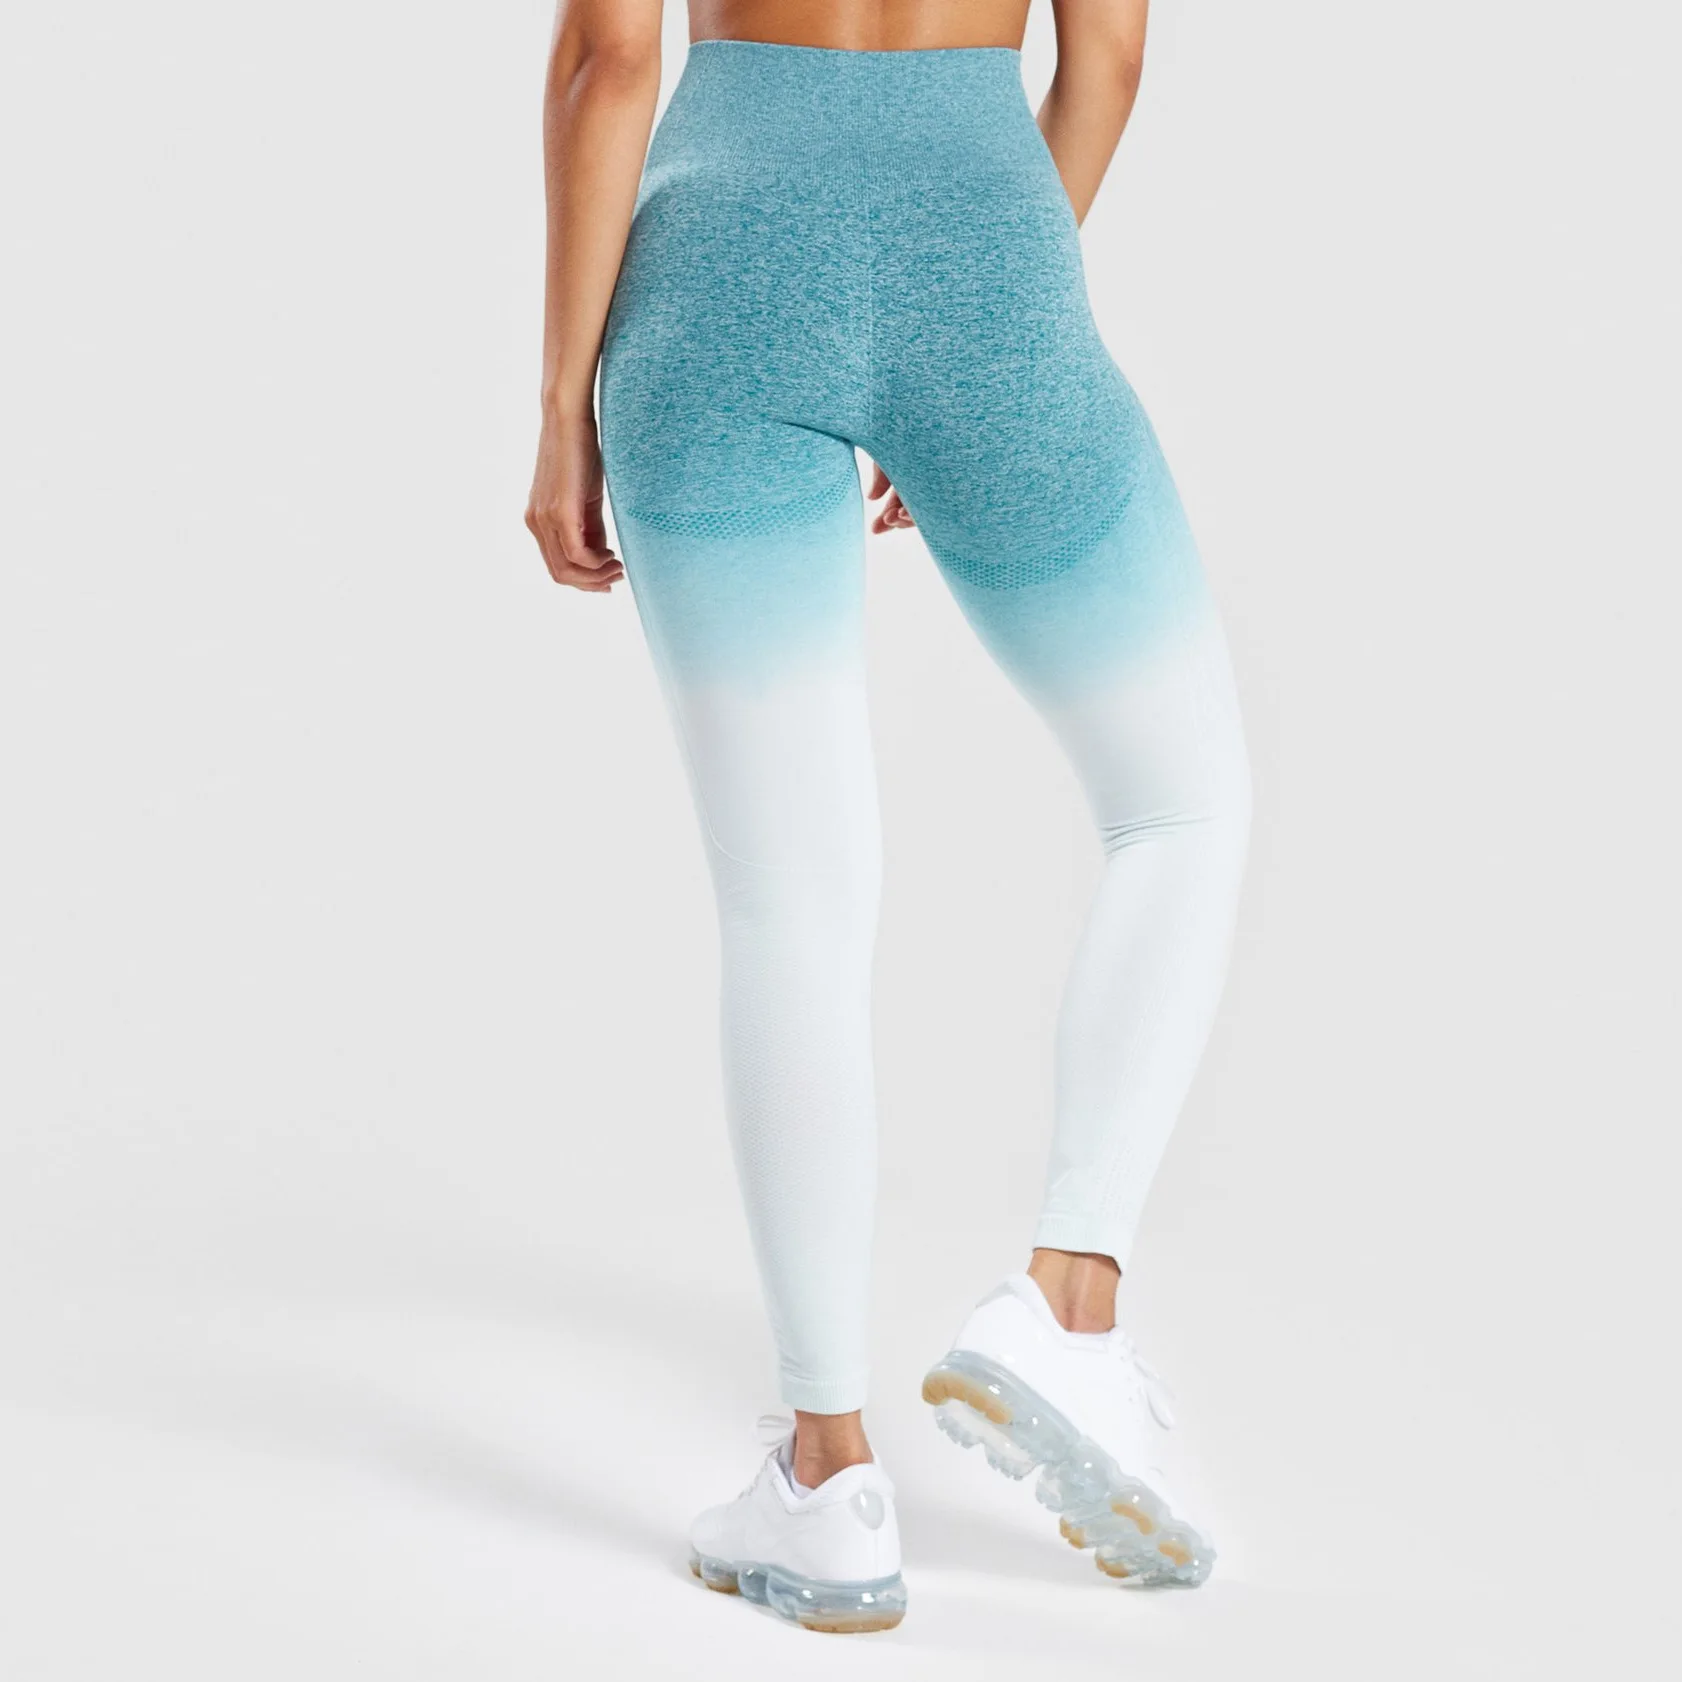 Gradient Color Yoga Leggings For Women Workout Sports Pants High Waist Pants Running Fitness Sportswear Gym Leggings Hip Lifting